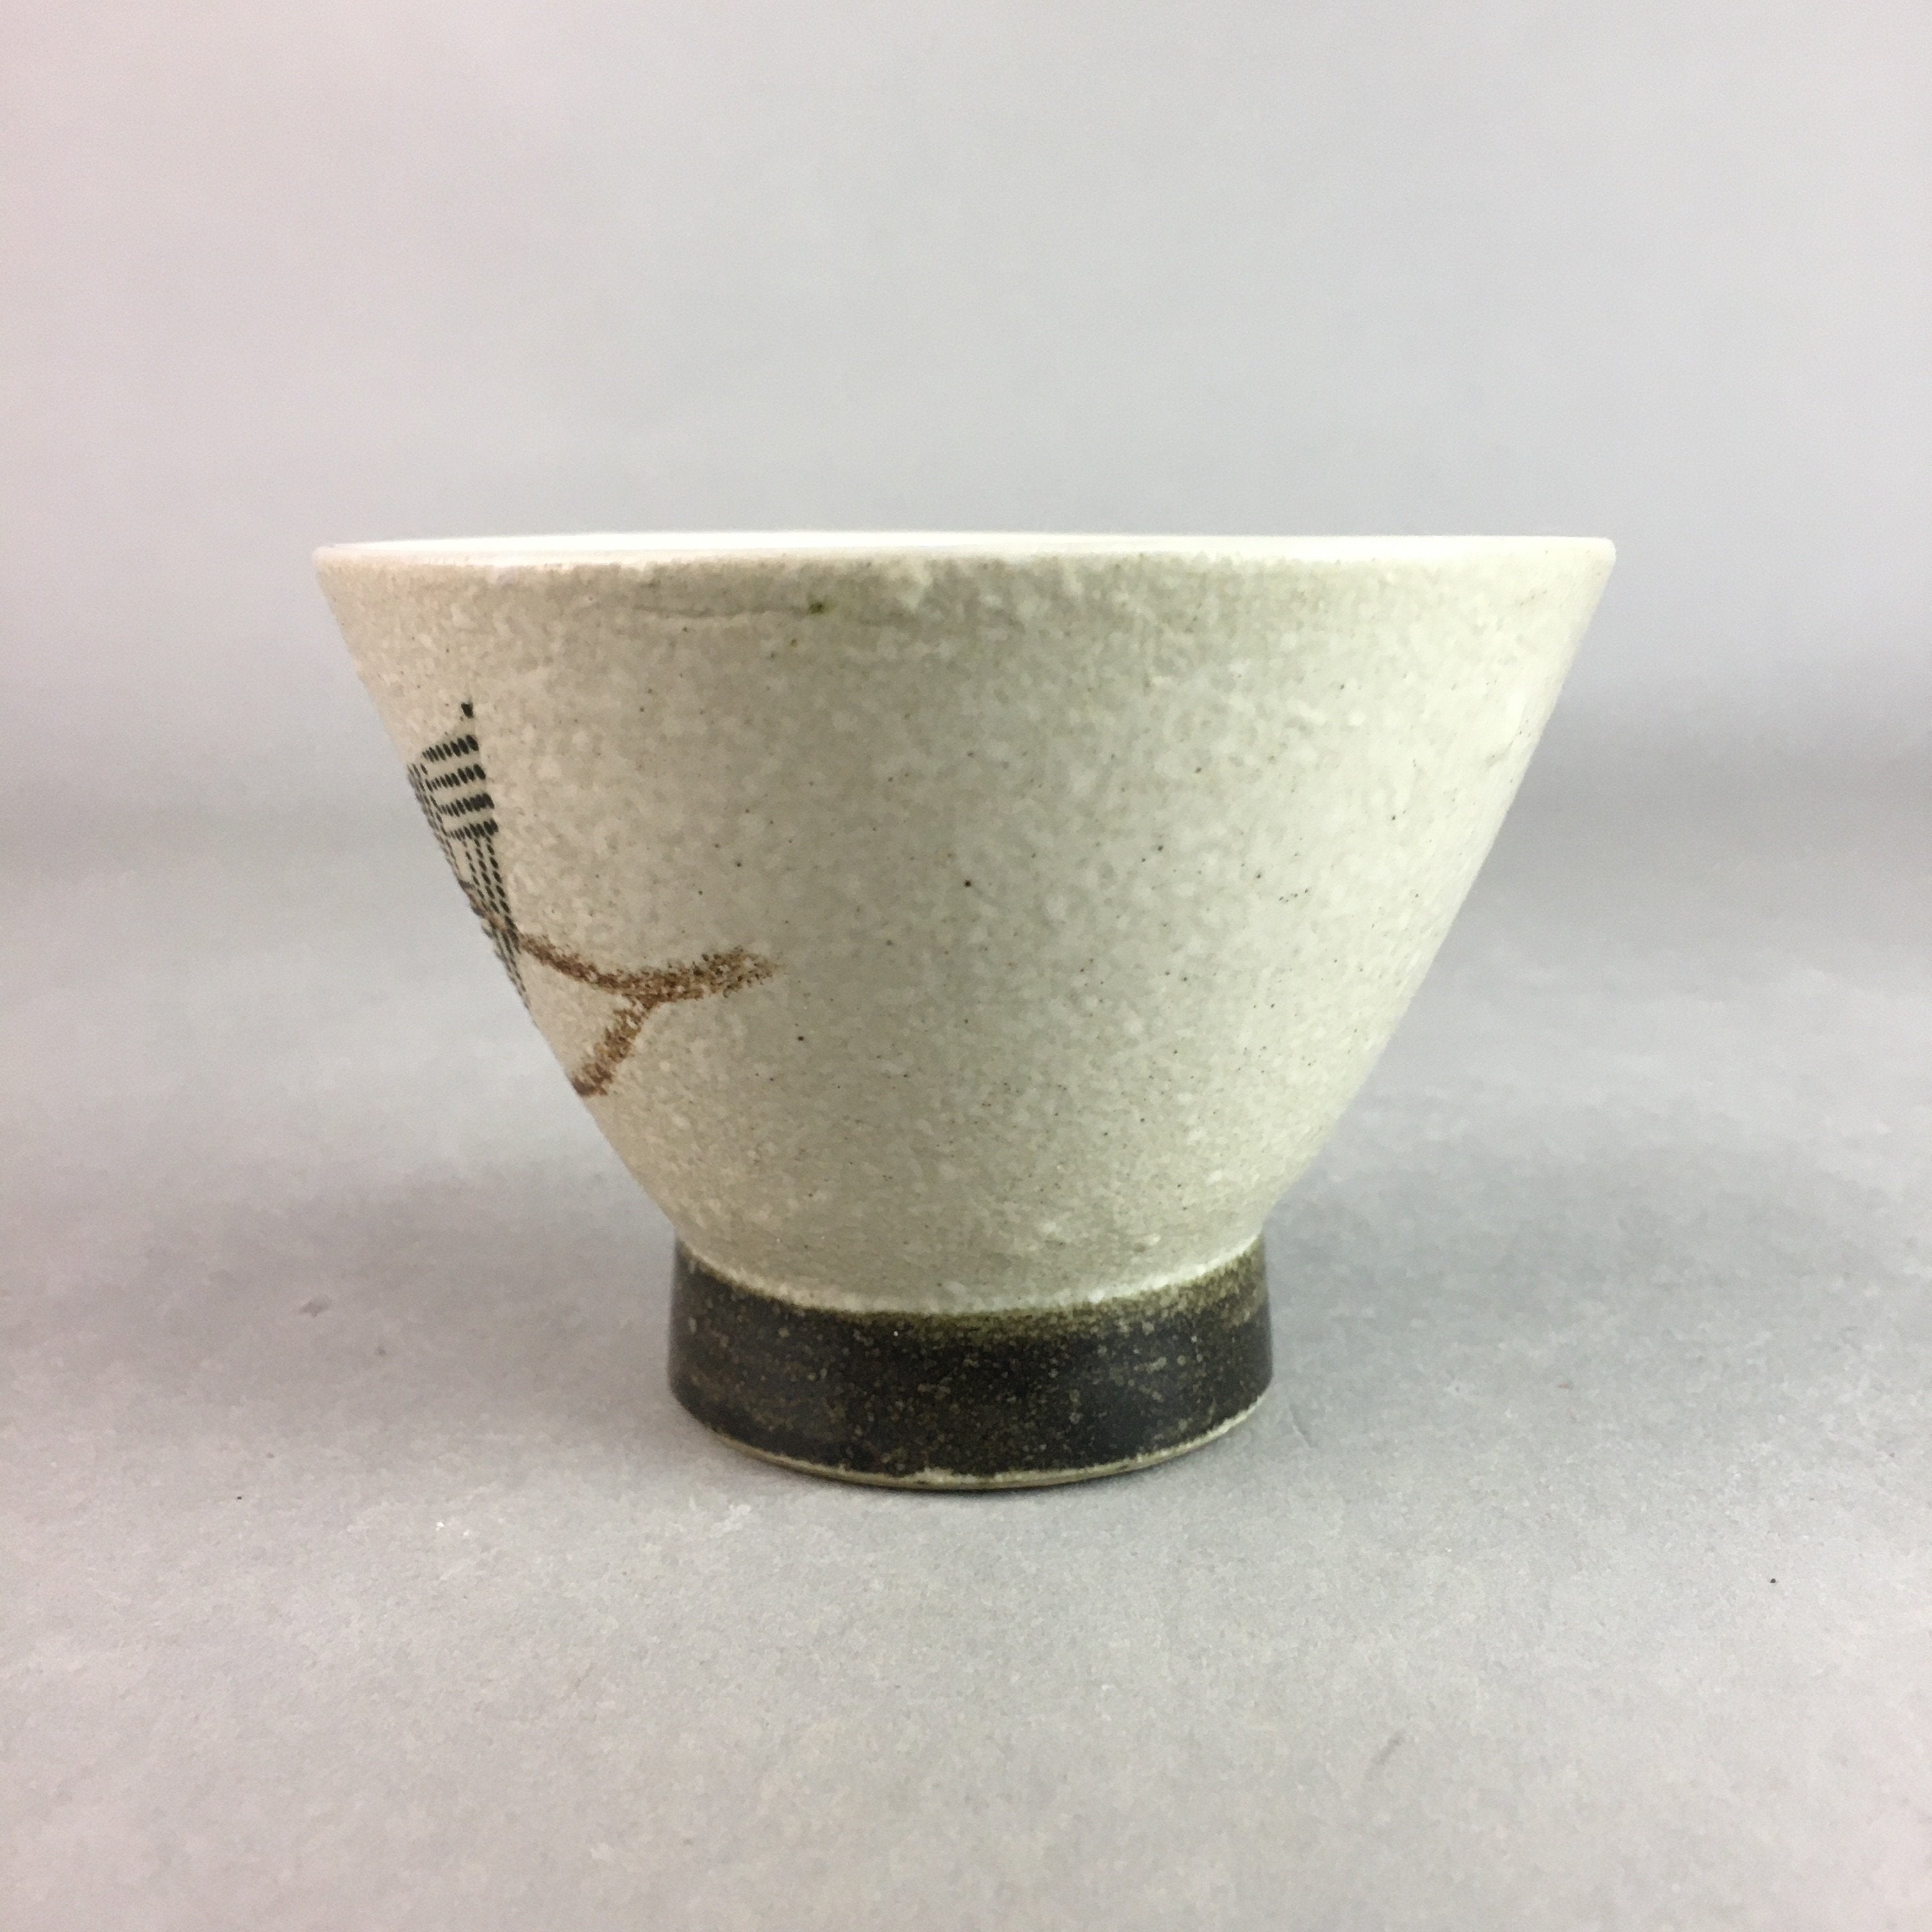 Japanese Ceramic Sake Cup Guinomi Sakazuki Vtg Pottery Leaf Design TC158